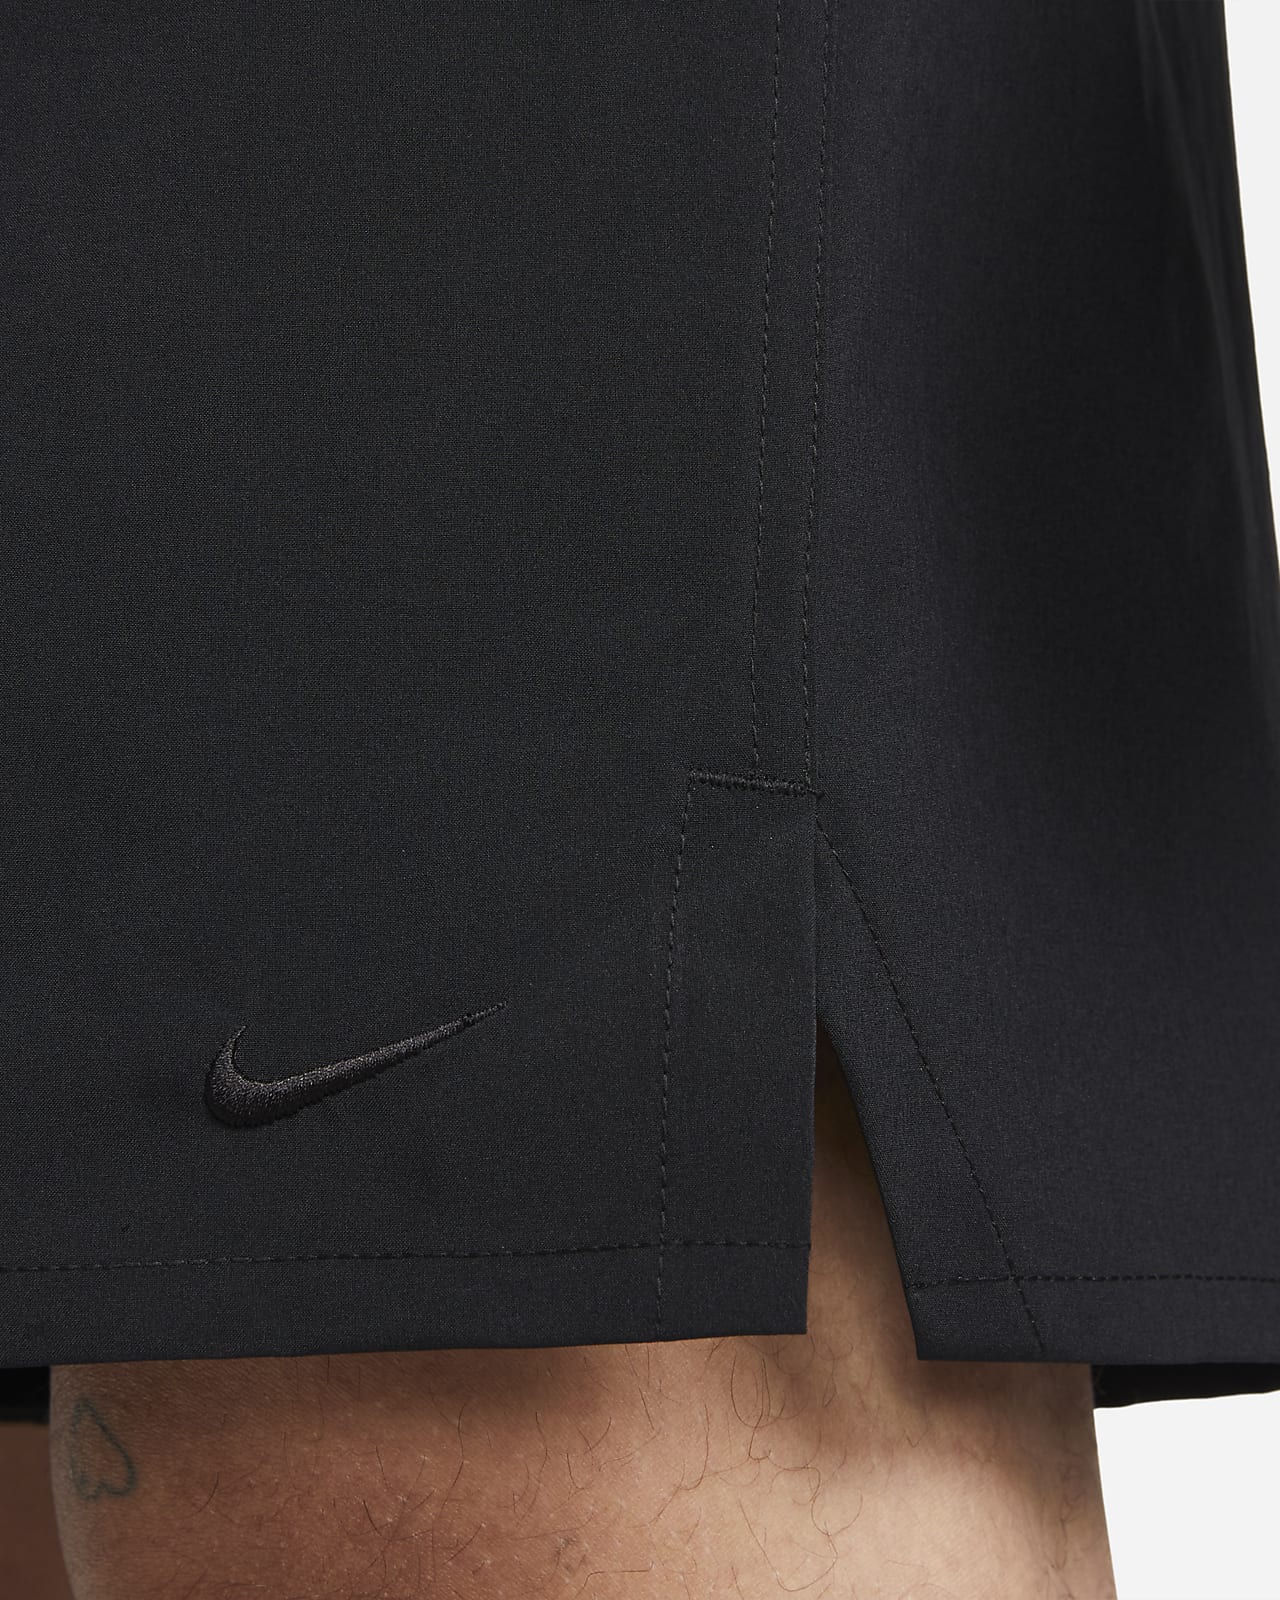 Nike Unlimited Men's Dri-FIT 23cm (approx.) Unlined Versatile Shorts ...